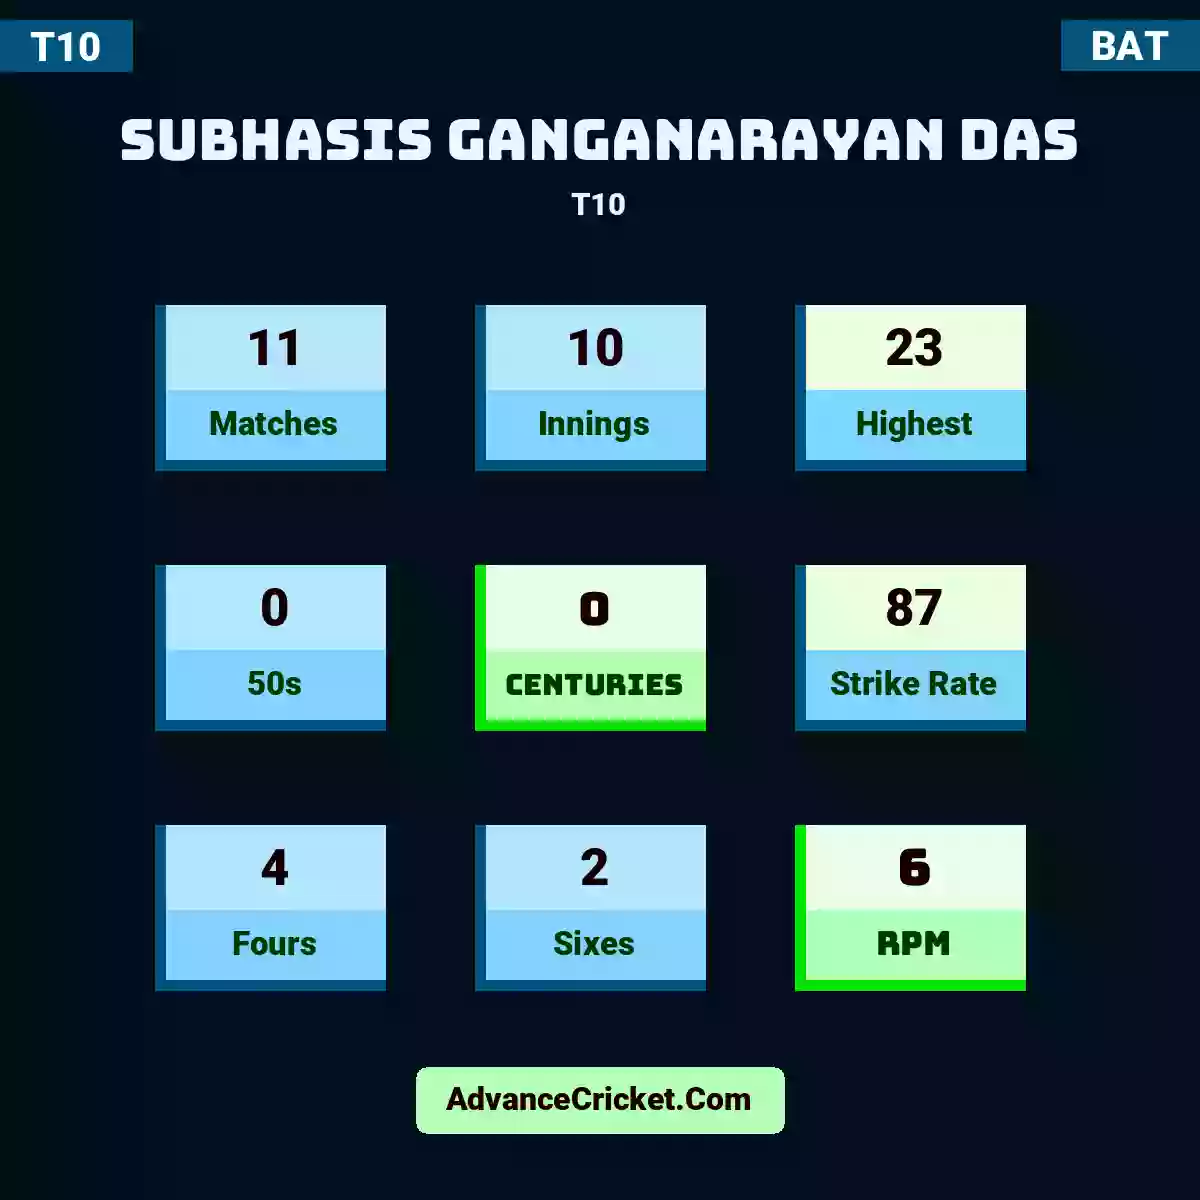 Subhasis Ganganarayan Das T10 , Subhasis Ganganarayan Das played 11 matches, scored 23 runs as highest, 0 half-centuries, and 0 centuries, with a strike rate of 87. S.Ganganarayan.Das hit 4 fours and 2 sixes, with an RPM of 6.